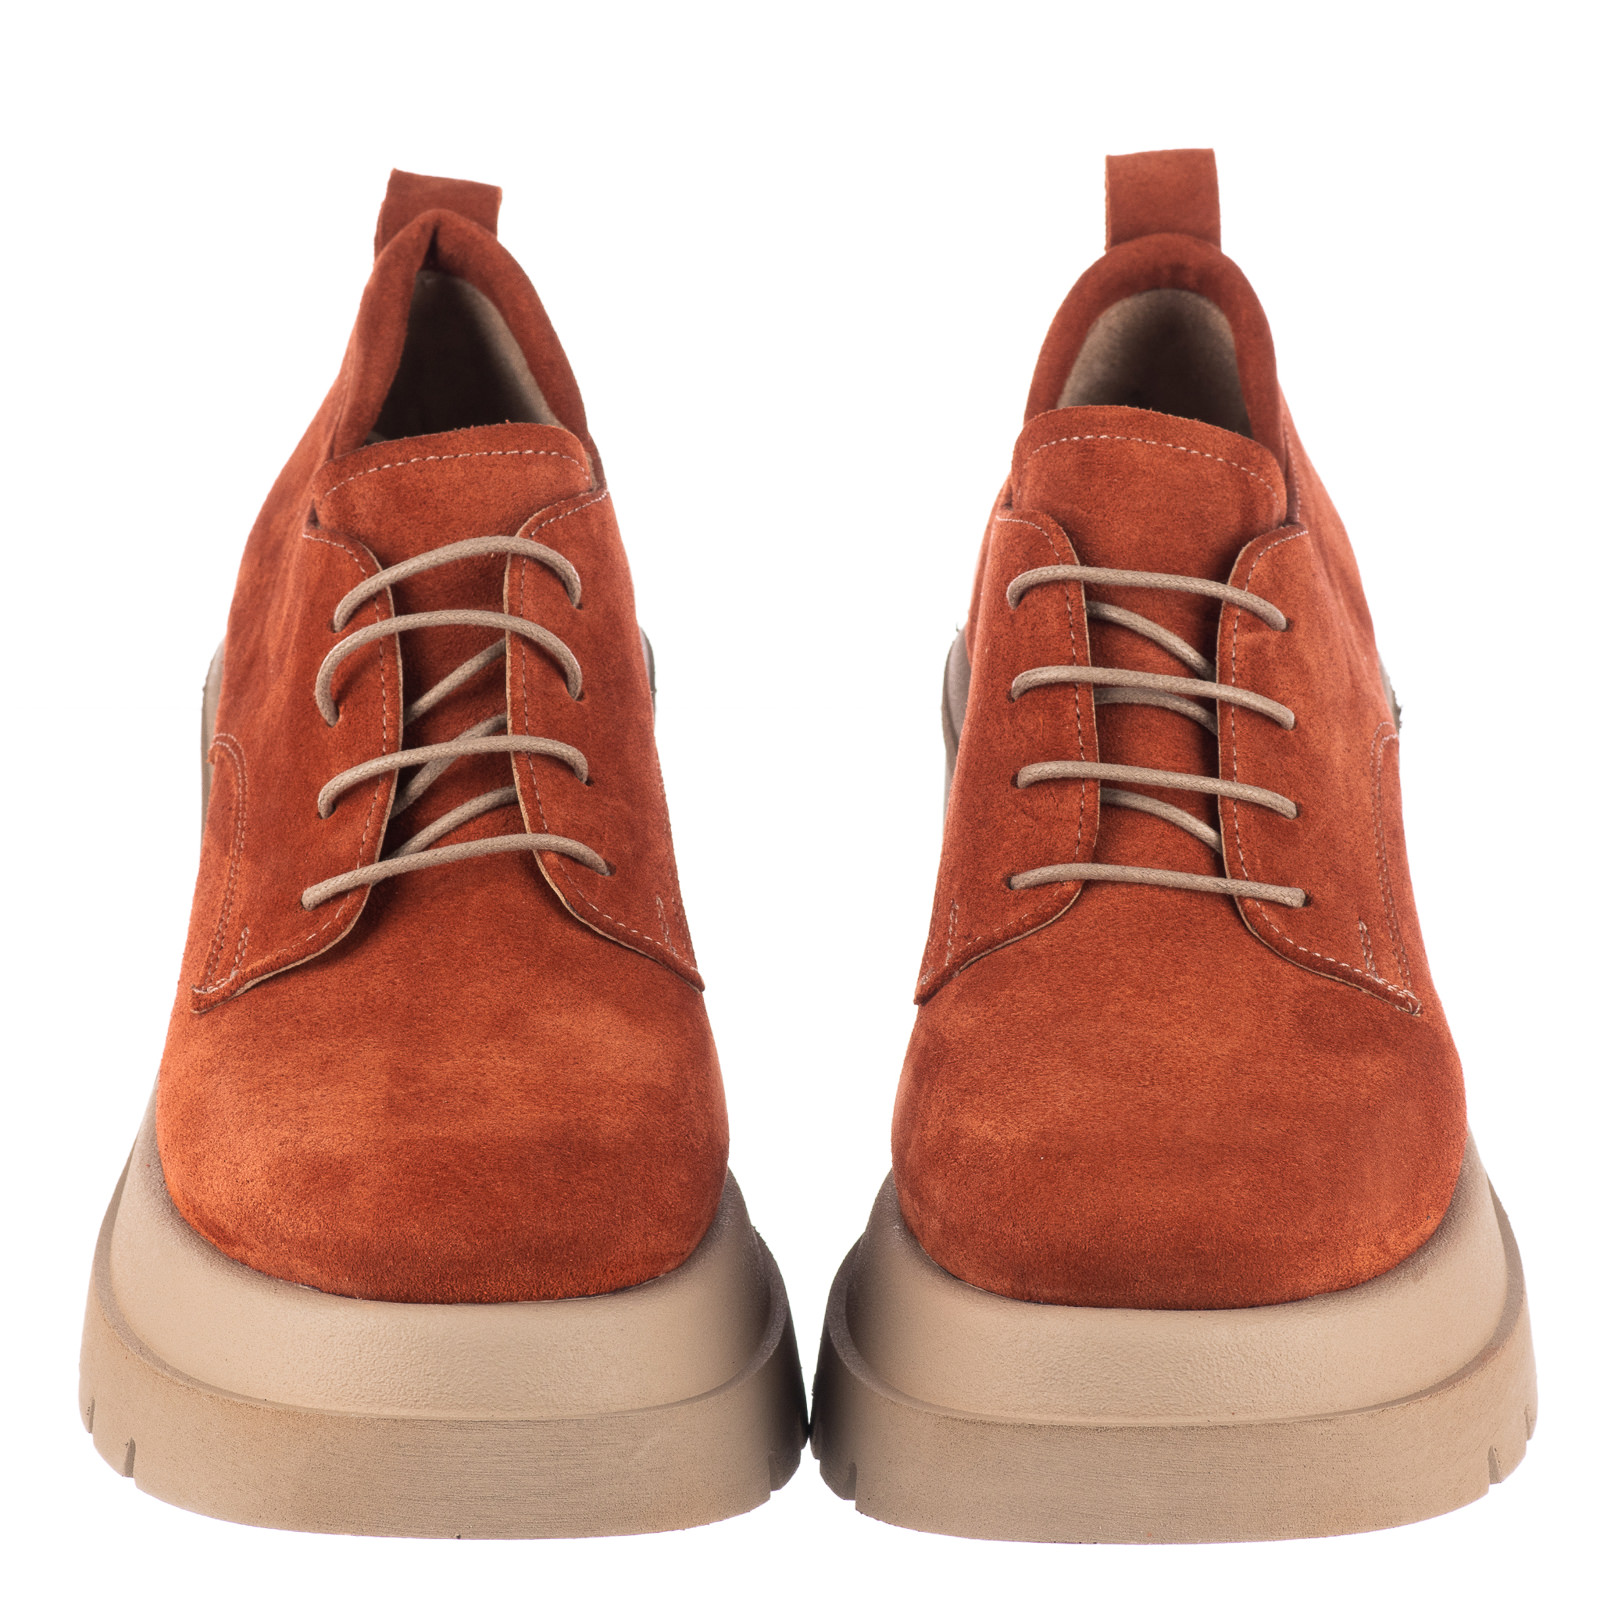 Leather shoes & flats B666 - ORANGE